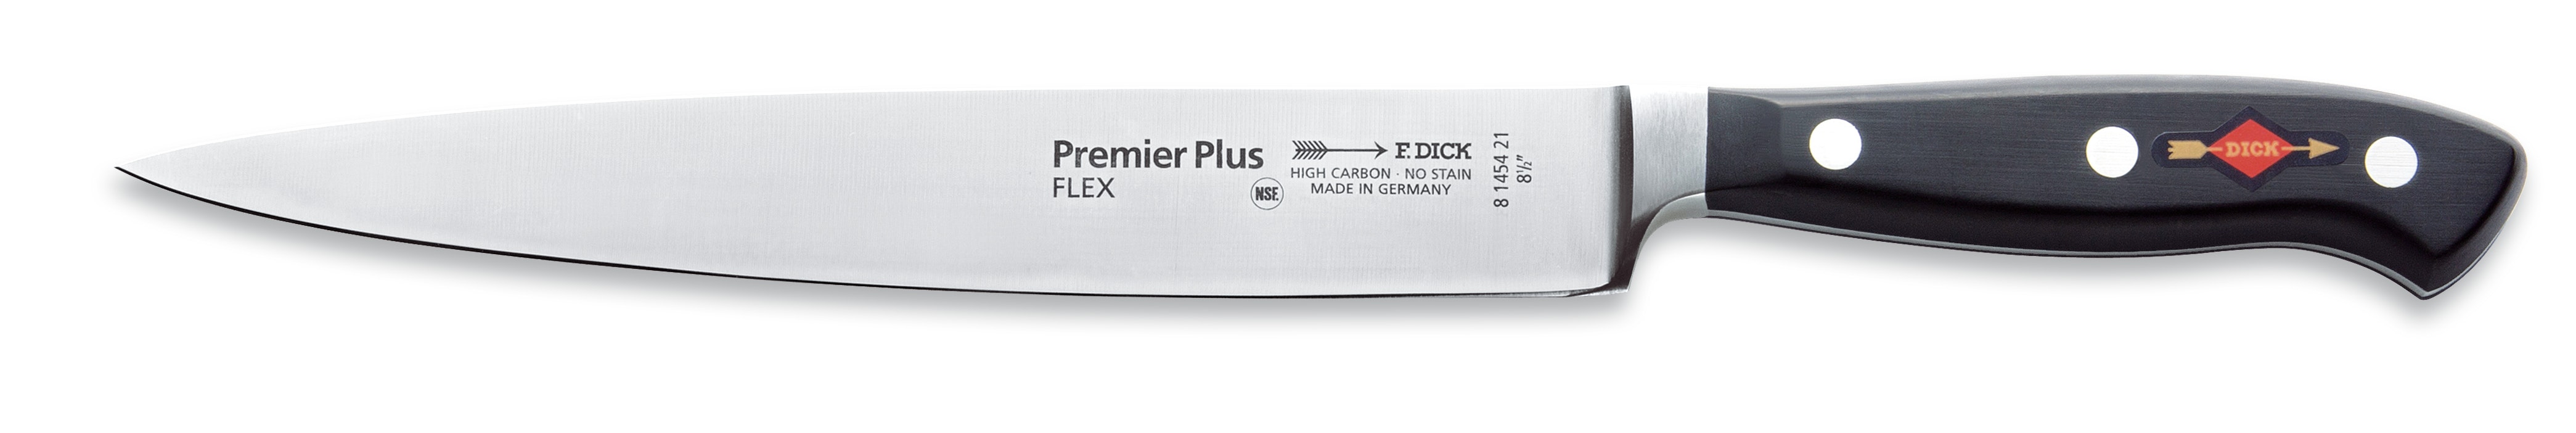 F. DICK Filetiermesser Premier Plus 21 cm